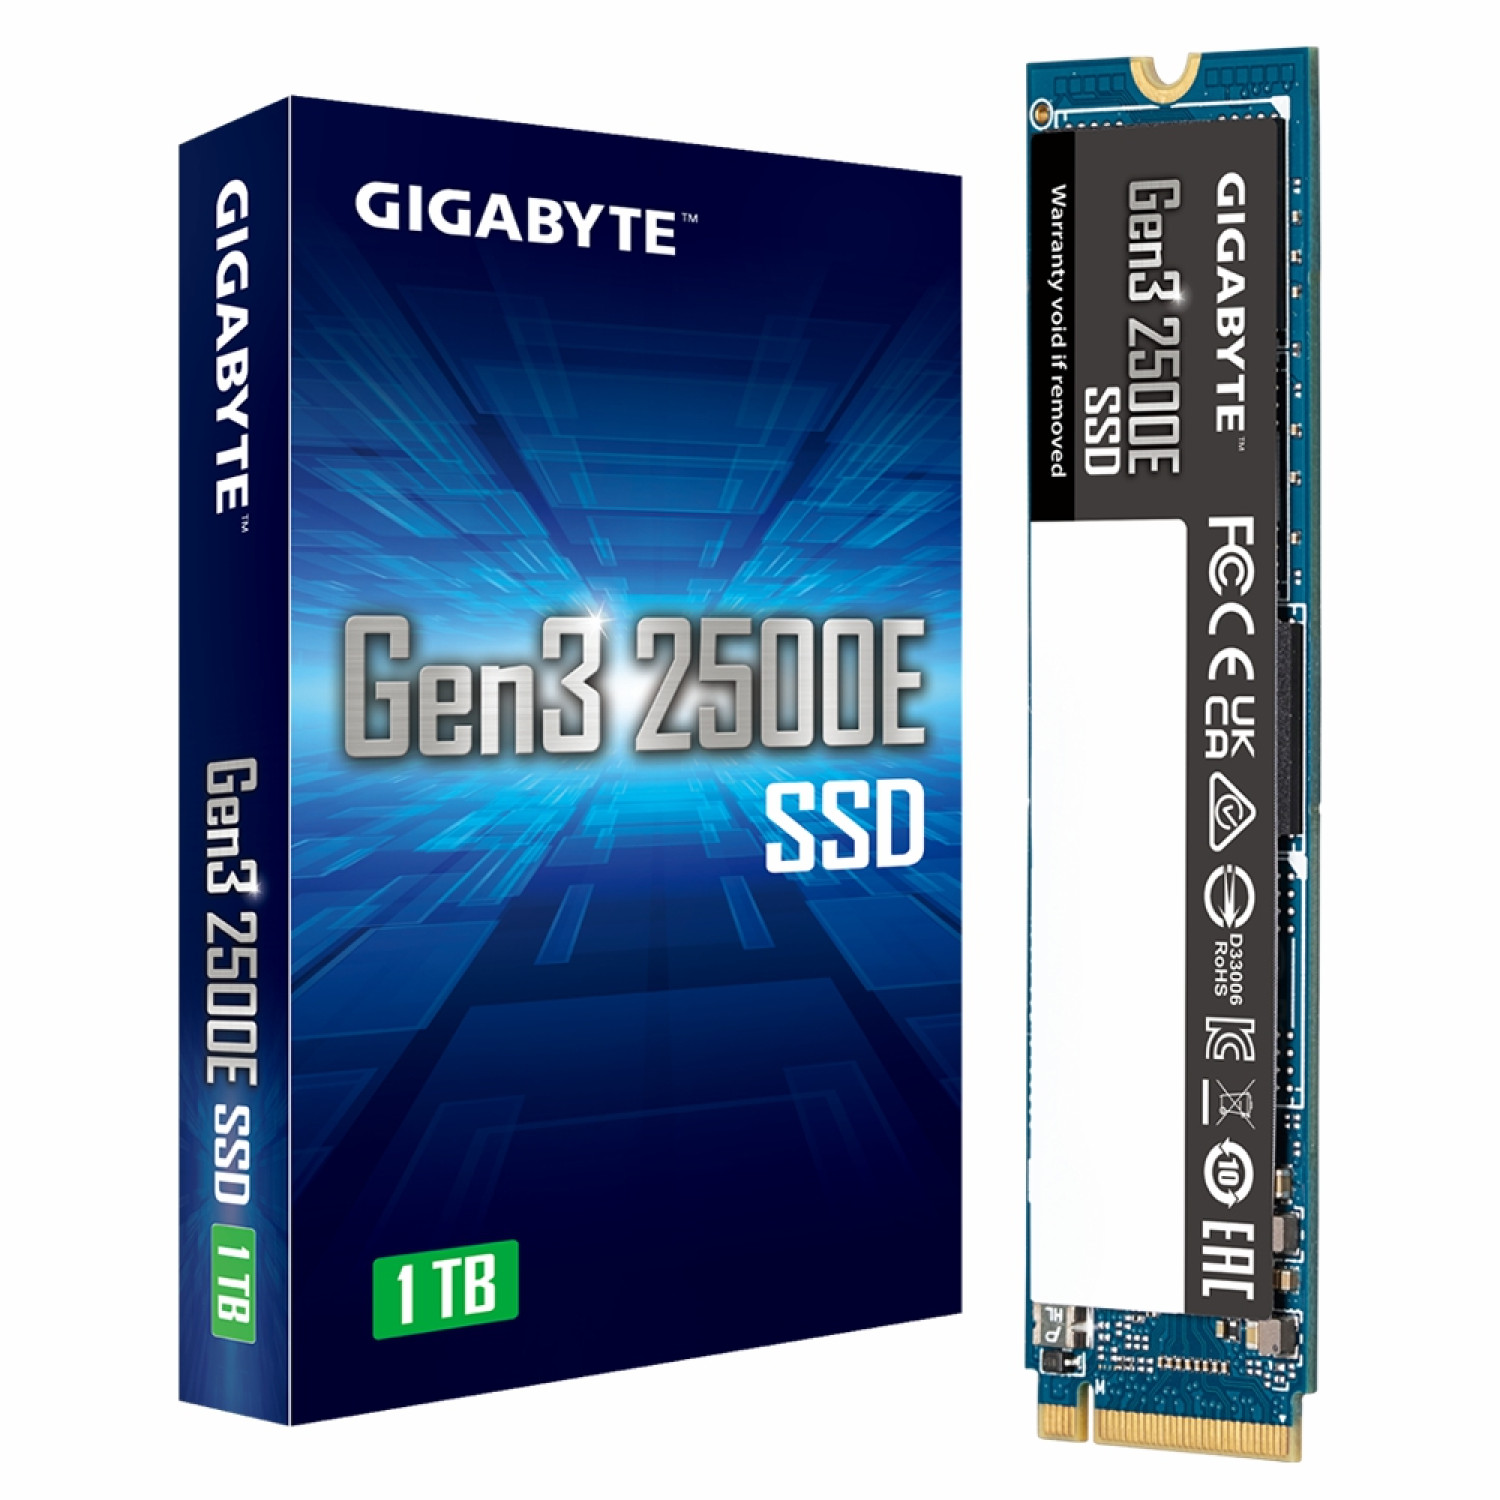 حافظه اس اس دی Gigabyte Gen3 2500E 1TB-5